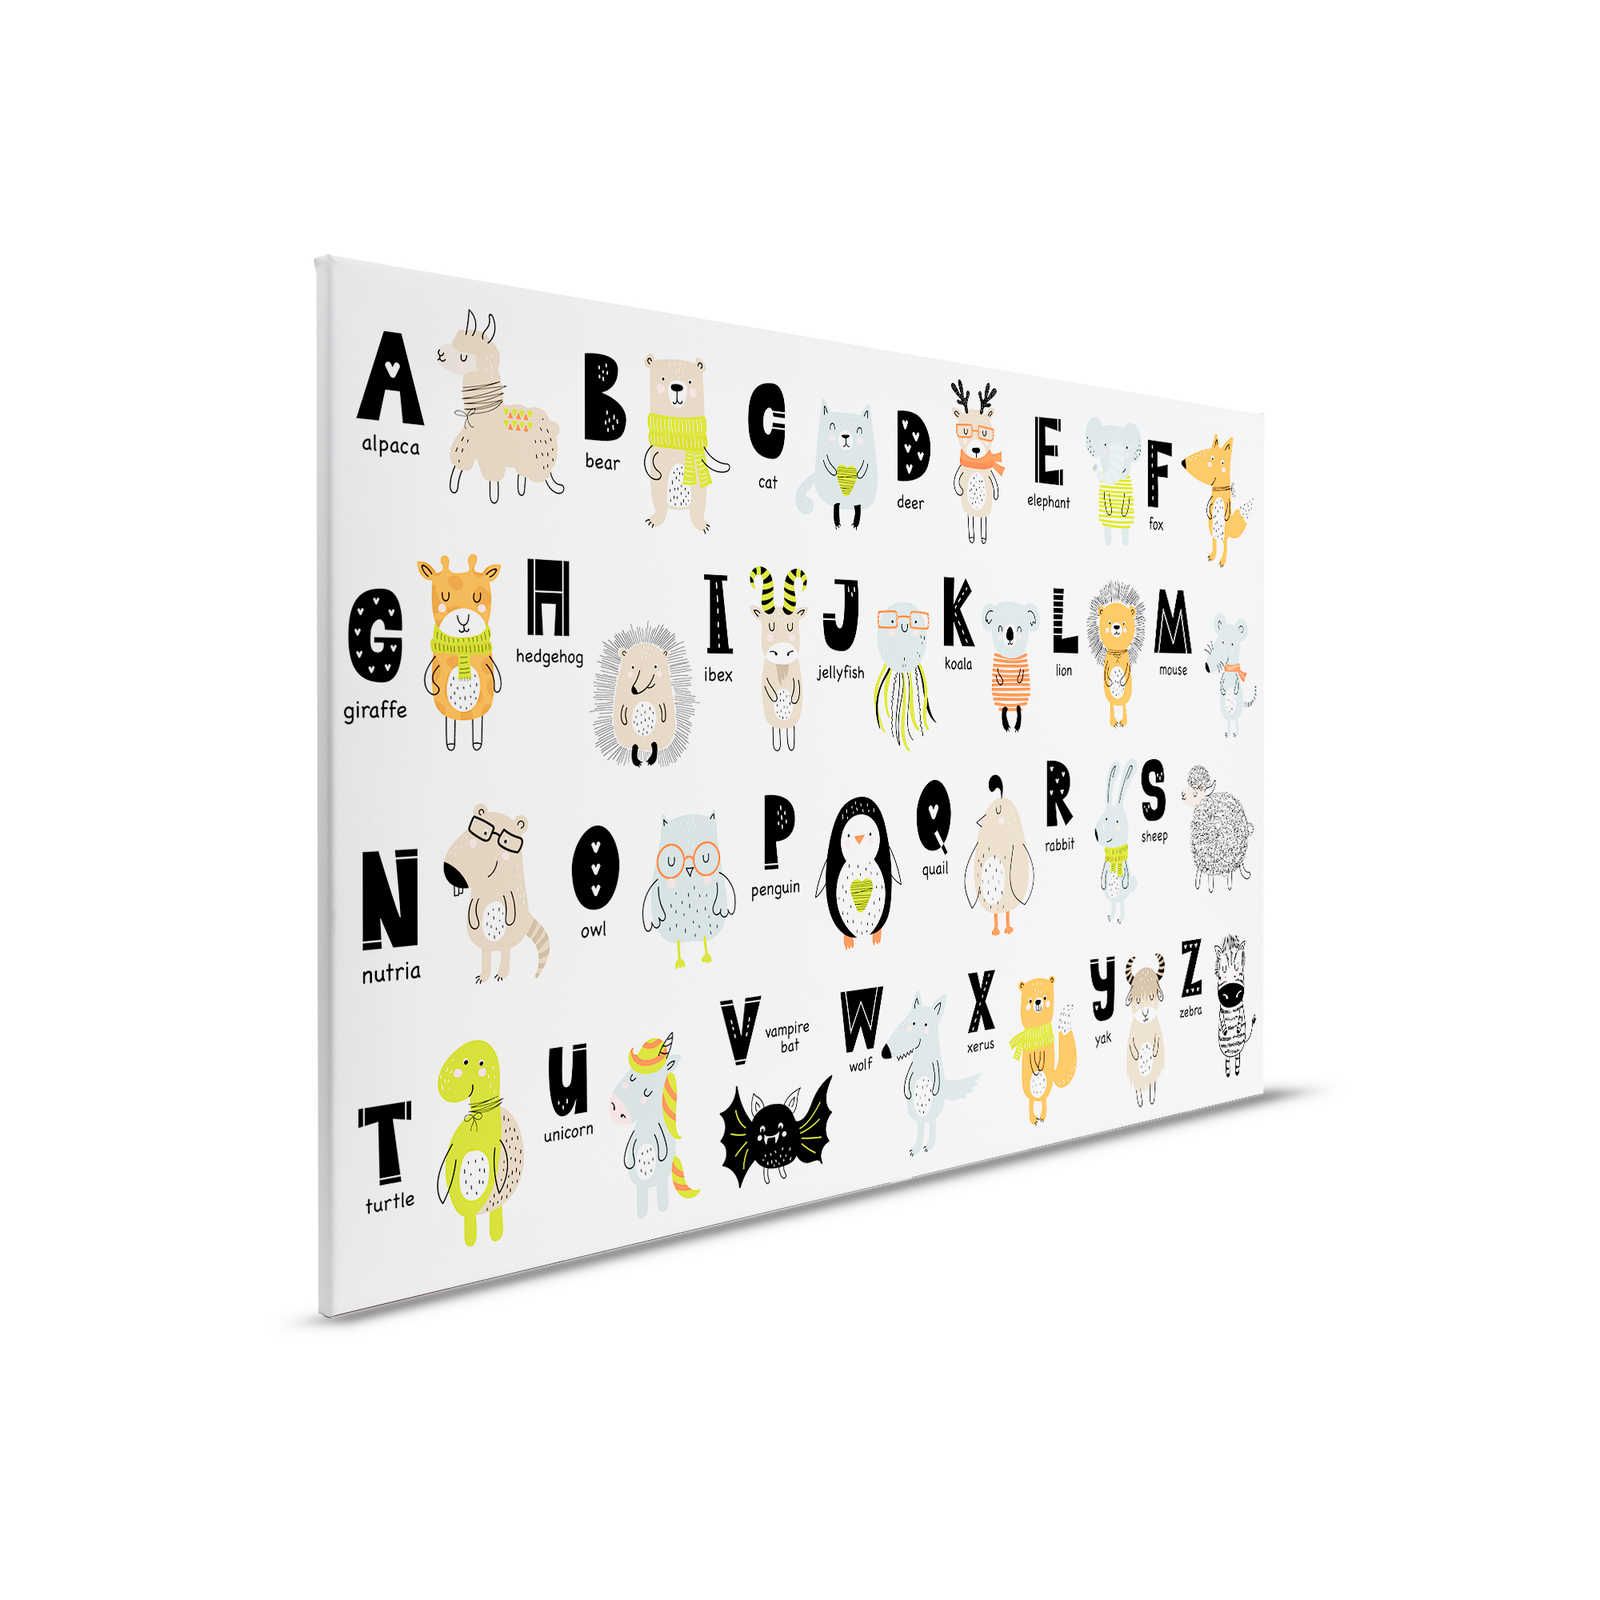         Canvas Alphabet with Animals and Animal Names - 90 cm x 60 cm
    